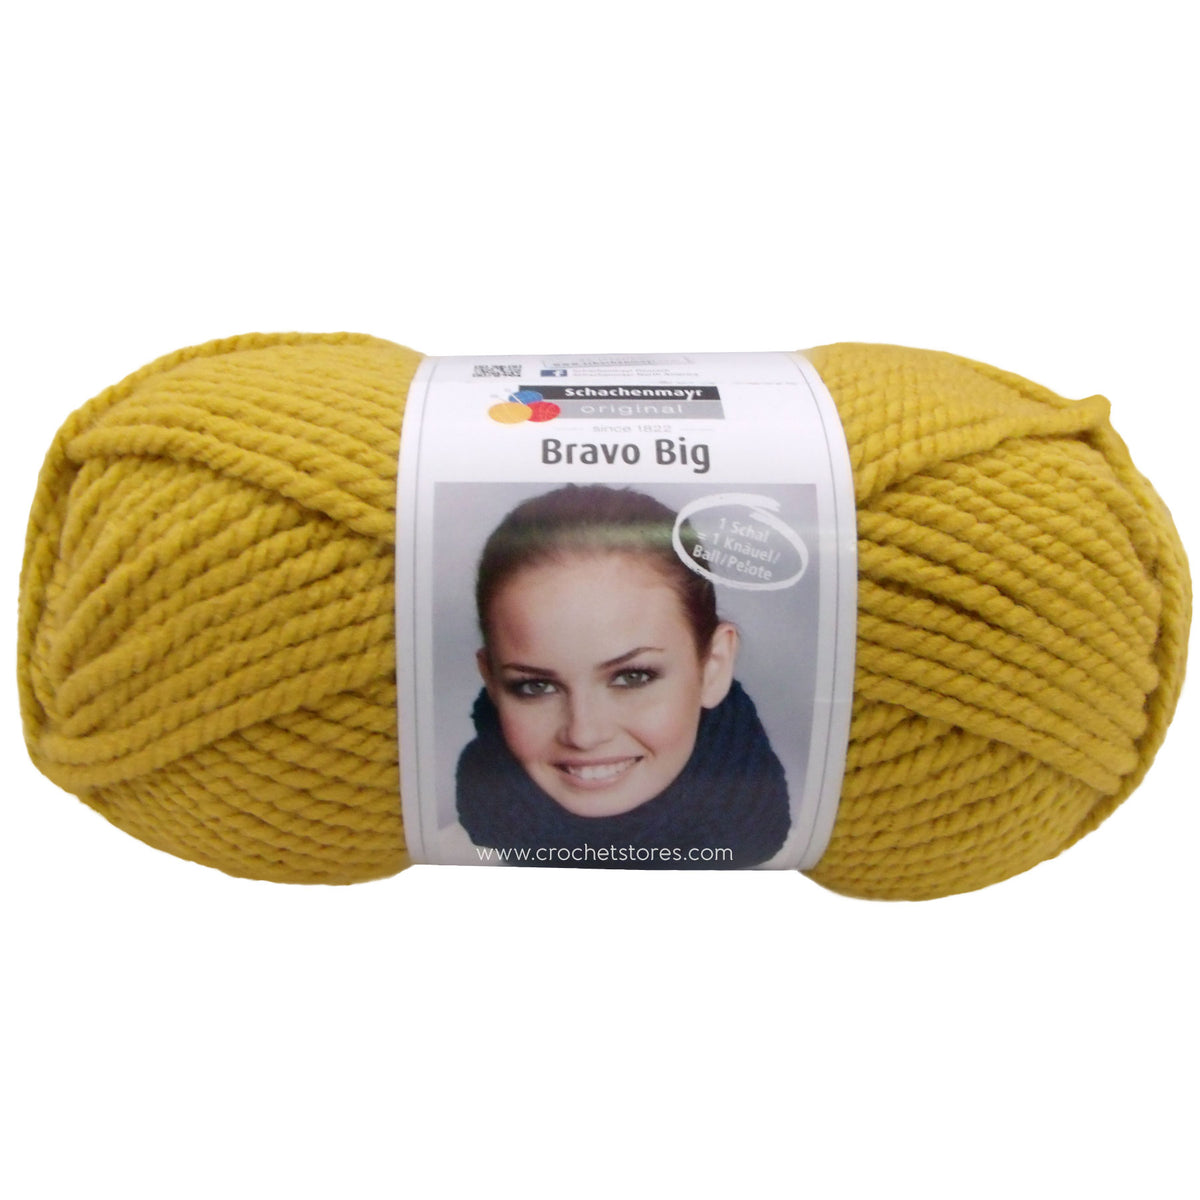 BRAVO BIG - Crochetstores9807705-1224053859043090